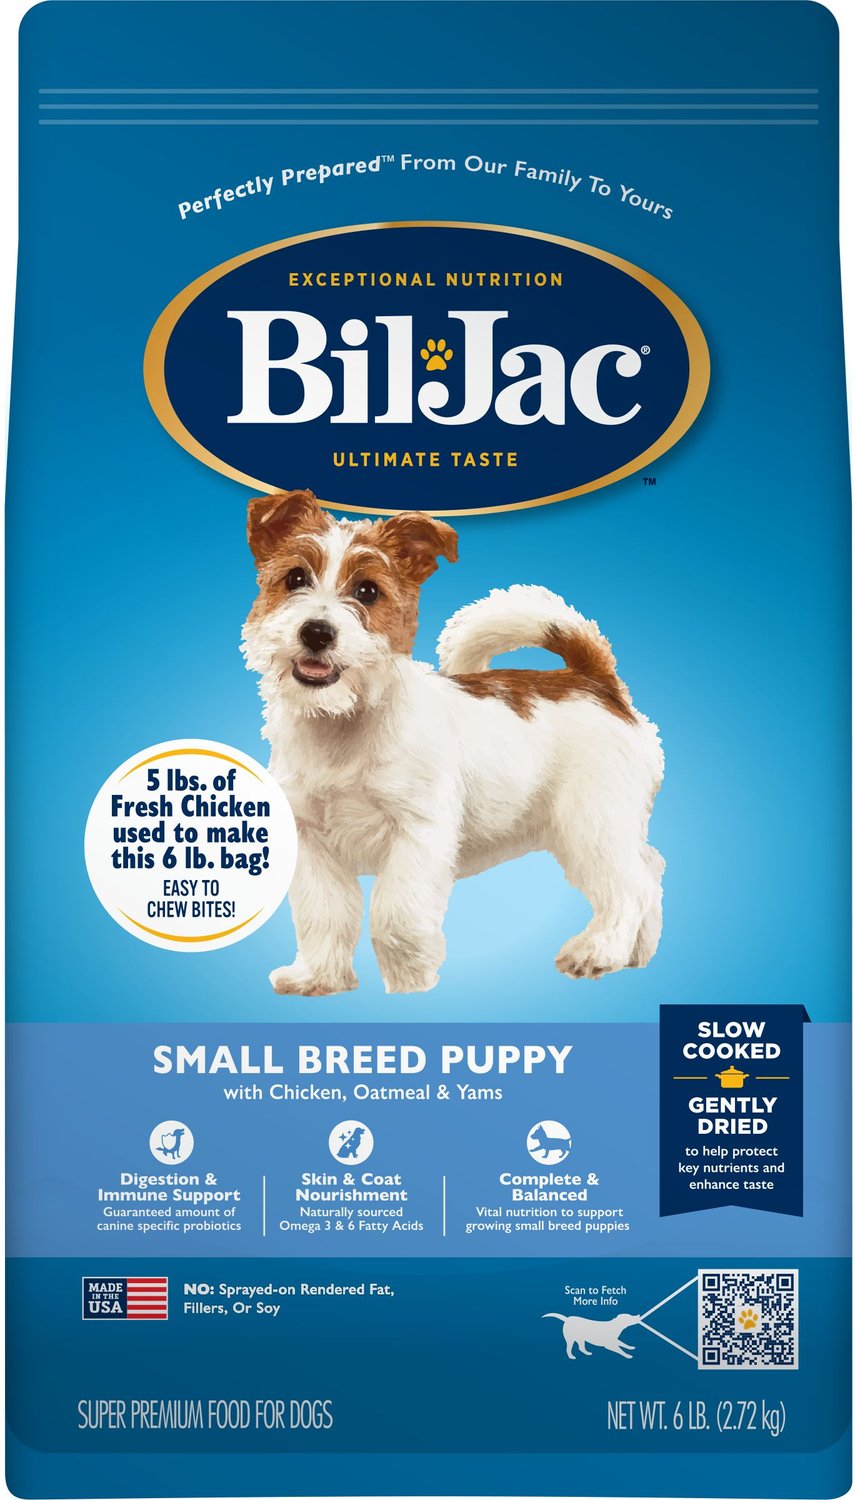 Bil Jac Large Breed Puppy Feeding Chart